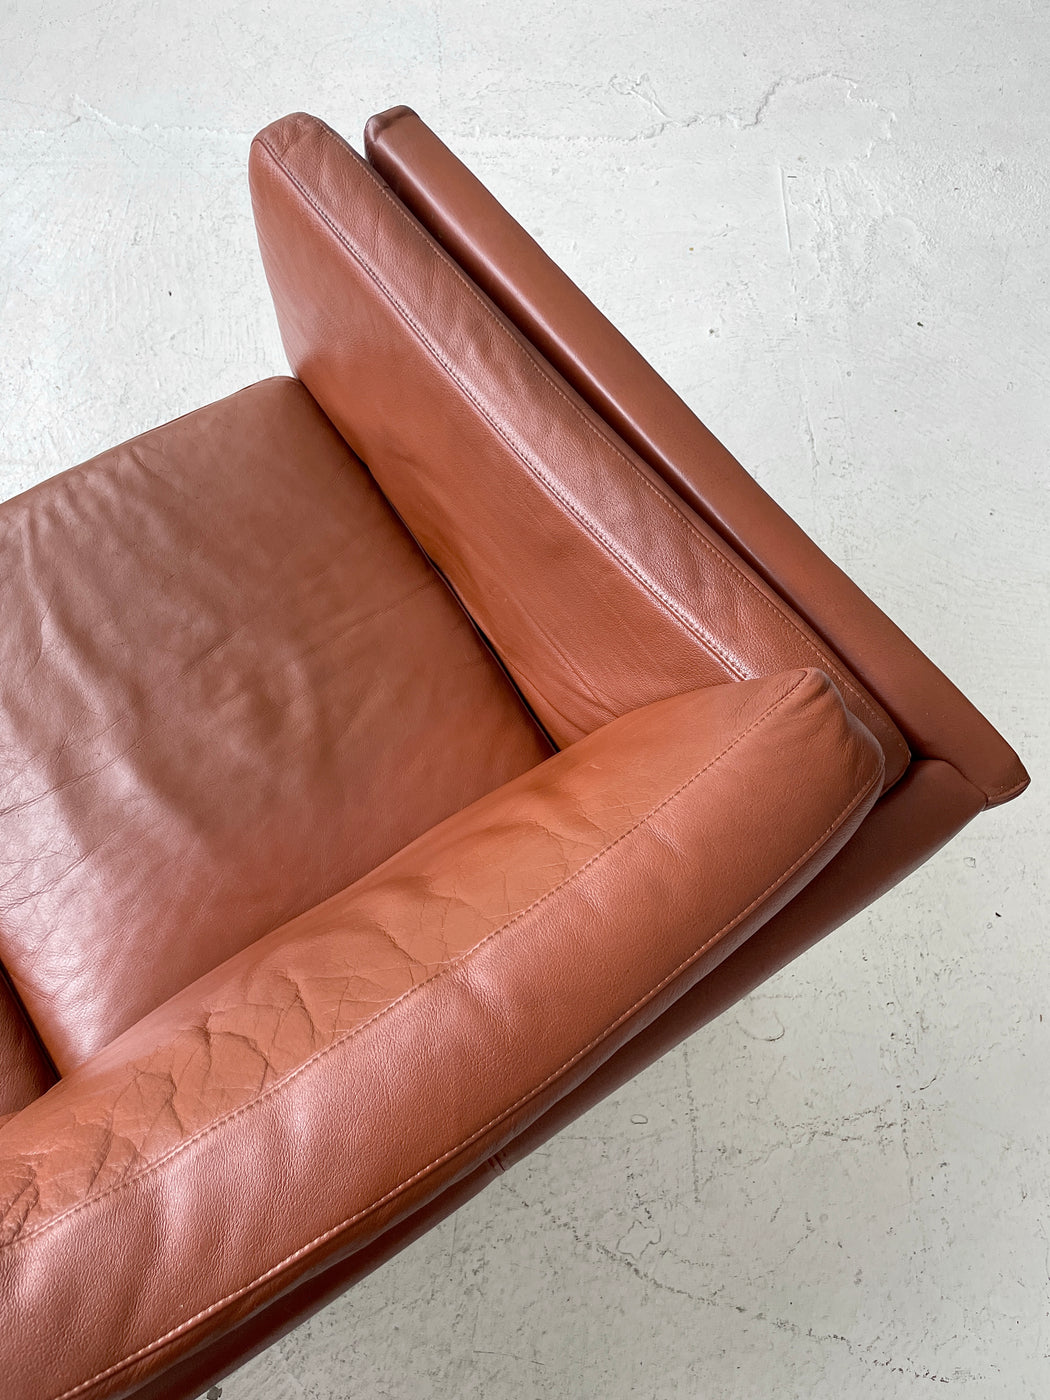 Danish Tan Leather Sofa